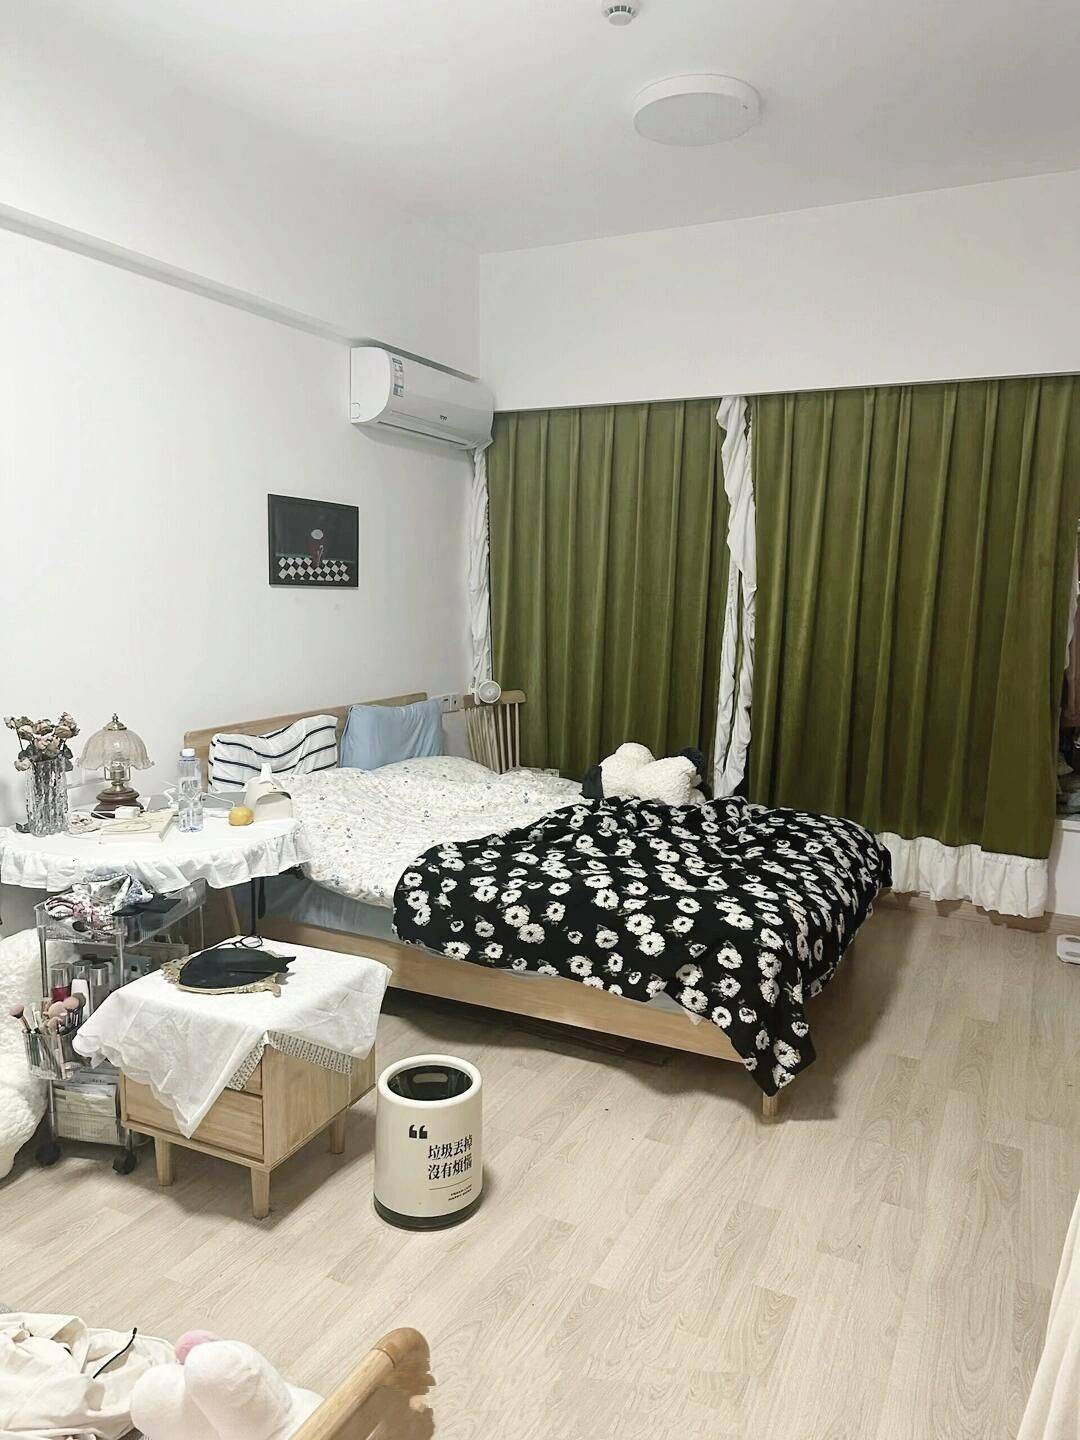 Ningbo-Haishu-Cozy Home,Clean&Comfy,No Gender Limit,Hustle & Bustle,“Friends”,Chilled,LGBTQ Friendly,Pet Friendly